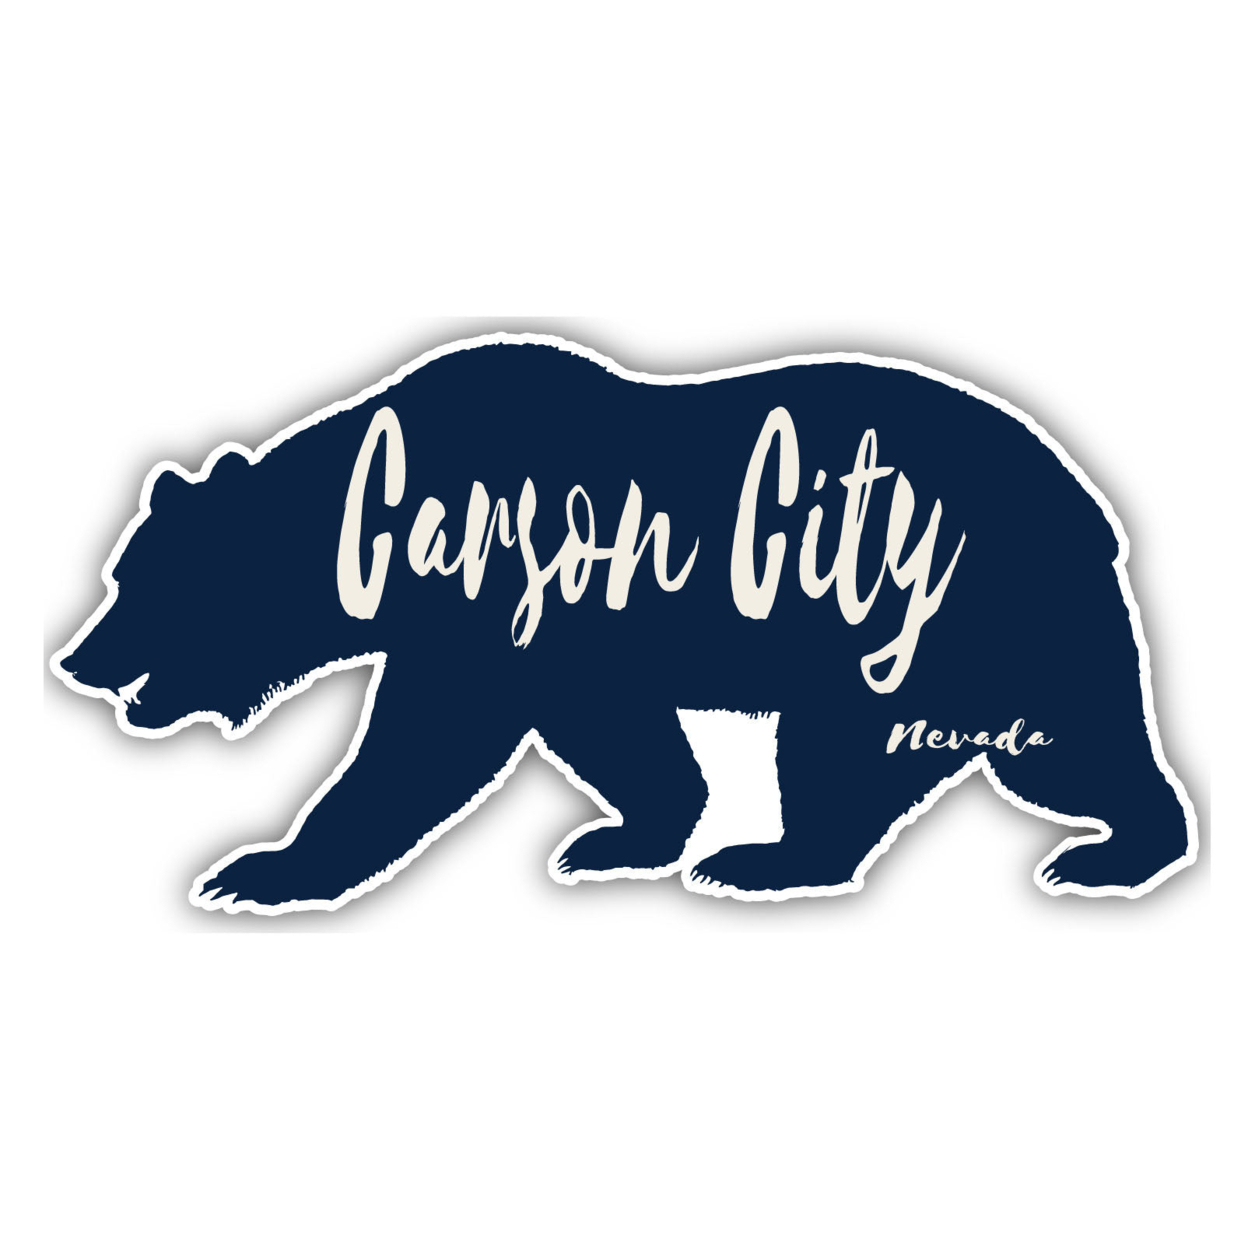 Carson City Nevada Souvenir Decorative Stickers (Choose Theme And Size) - Single Unit, 4-Inch, Bear